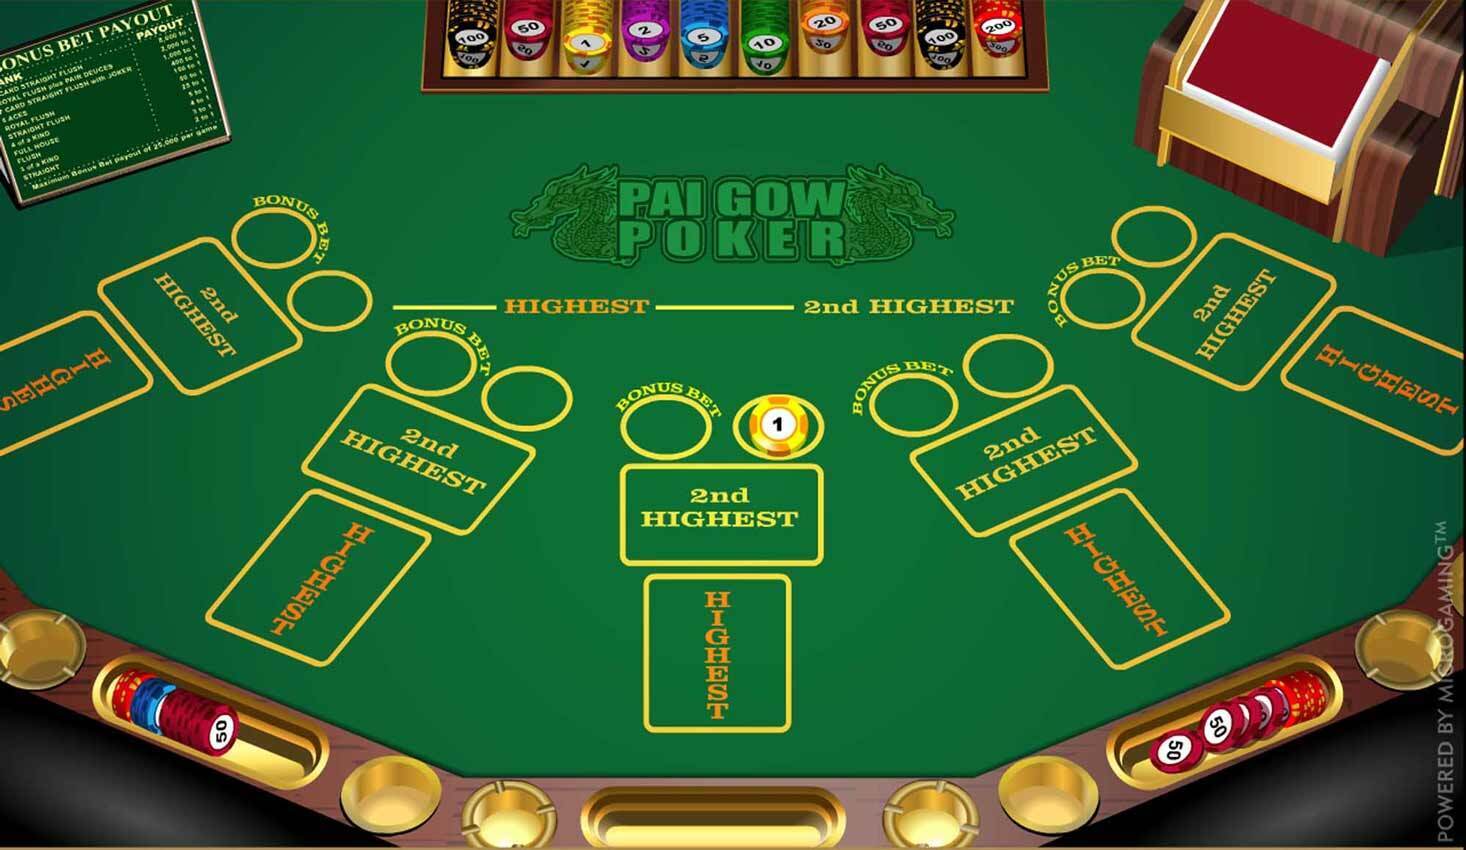 Pai Gow poker